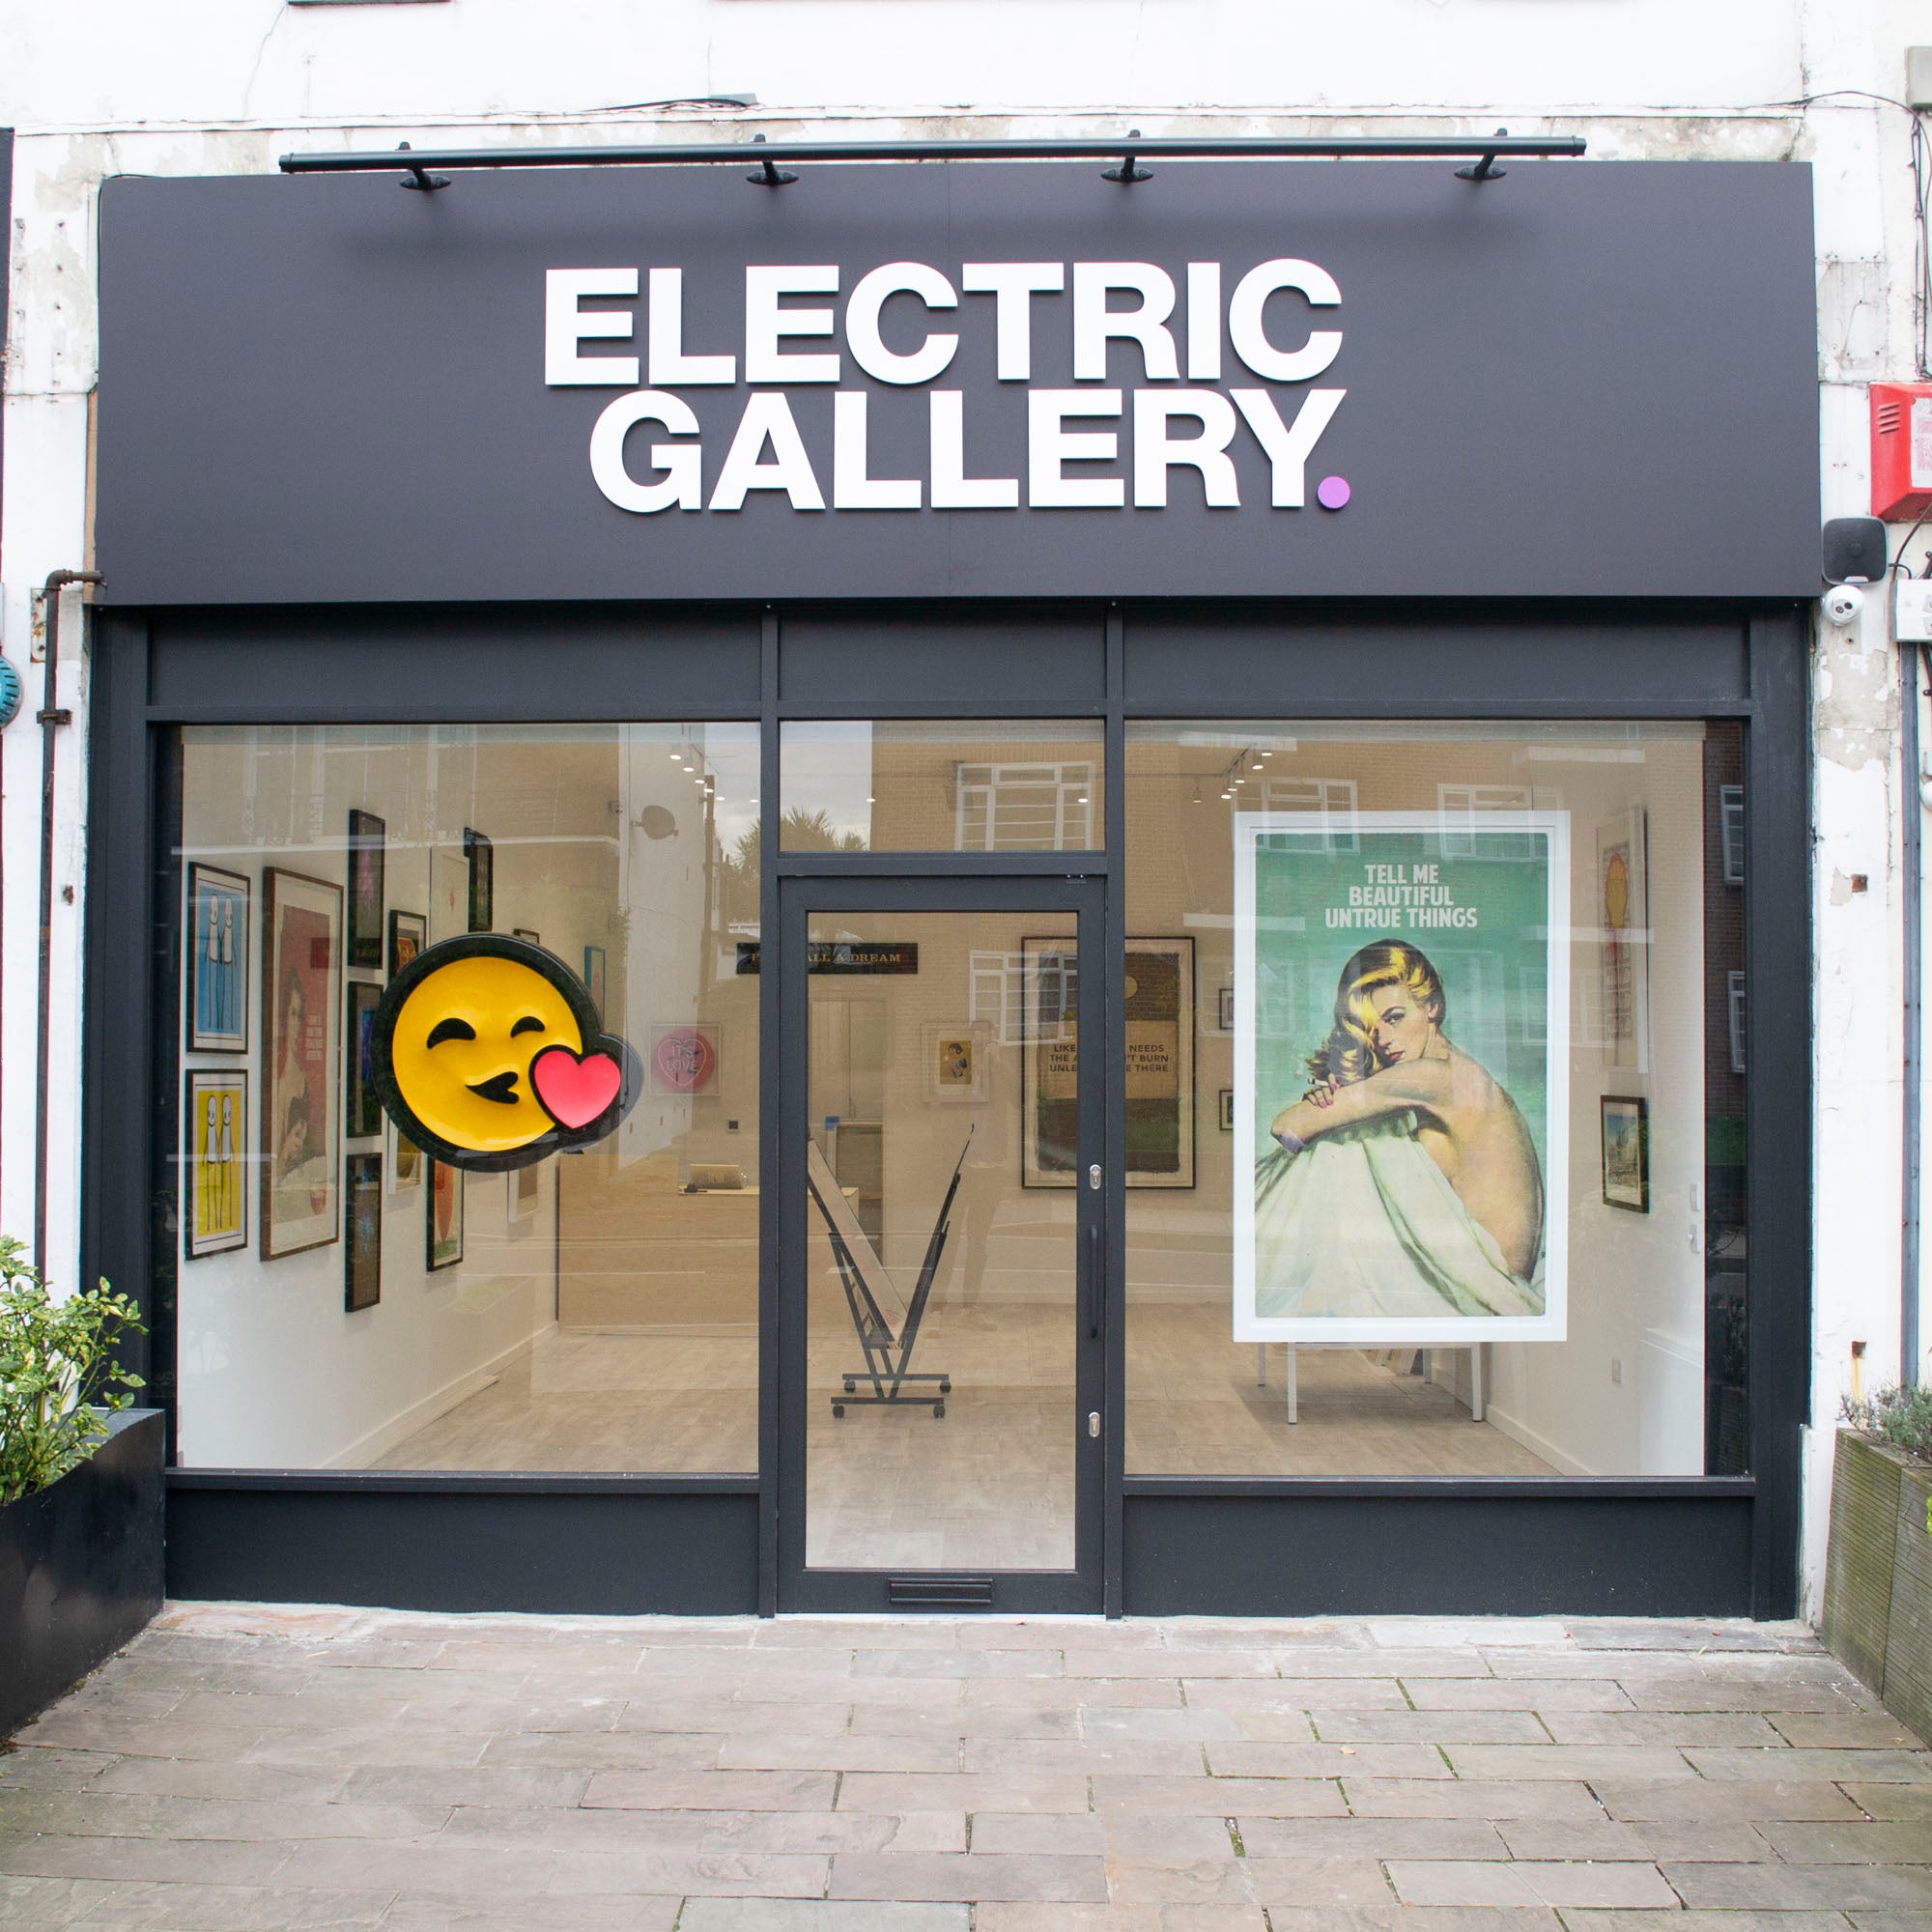 Electric Gallery, London E18 2QL